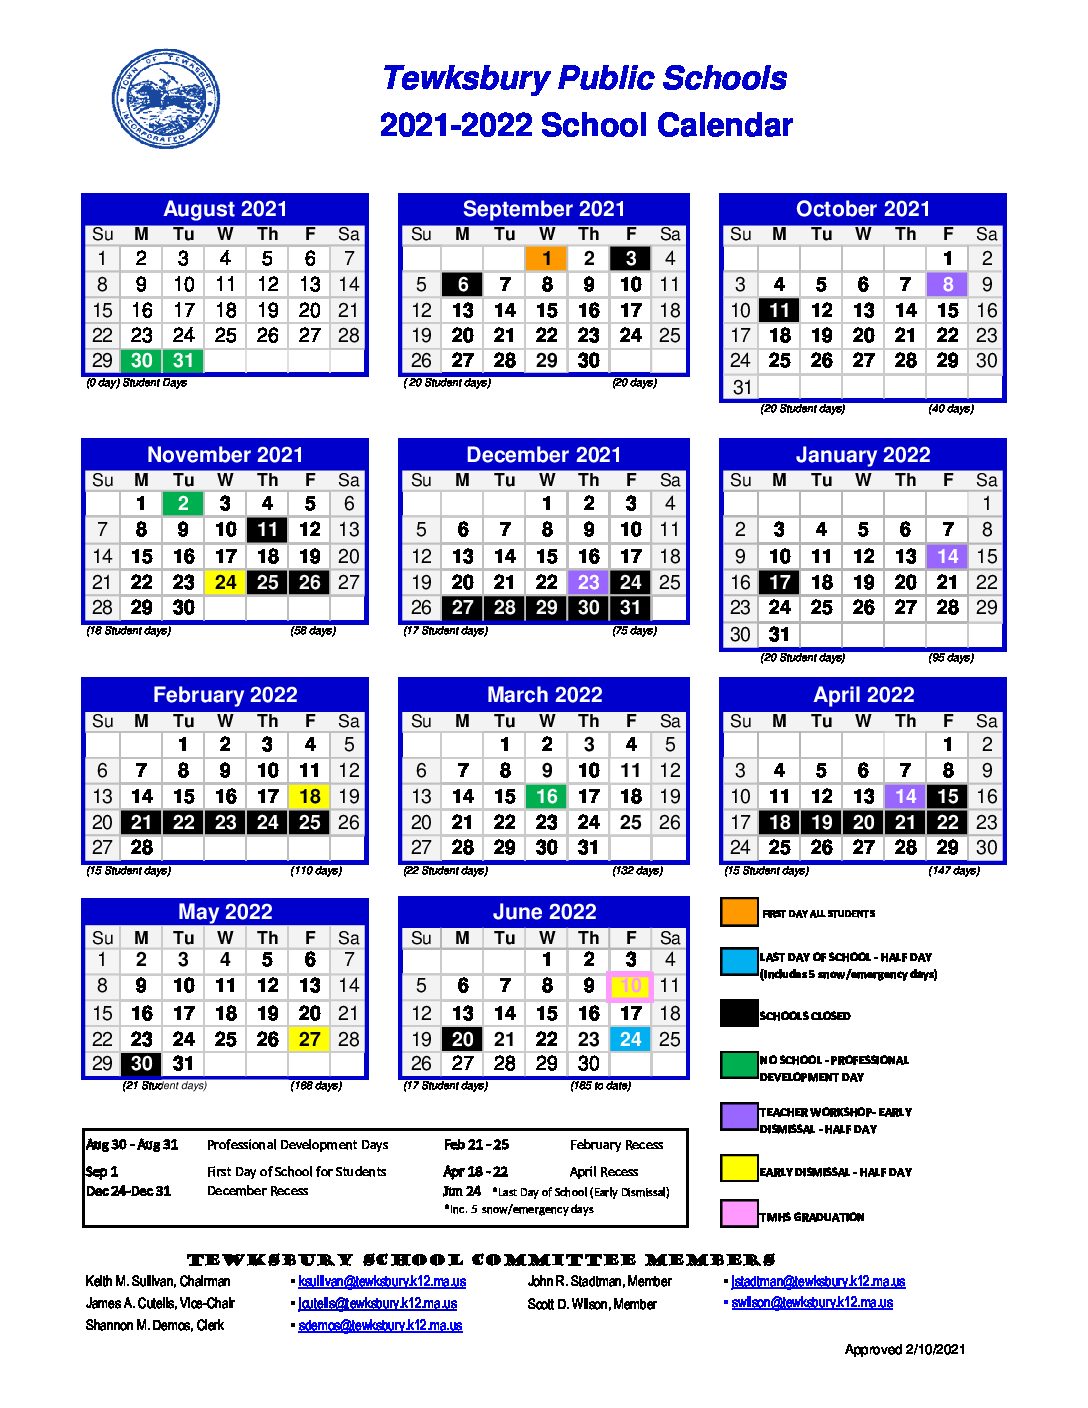 Tps Calendar 2022 2021-2022 School Calendar - Tewksbury Public Schools